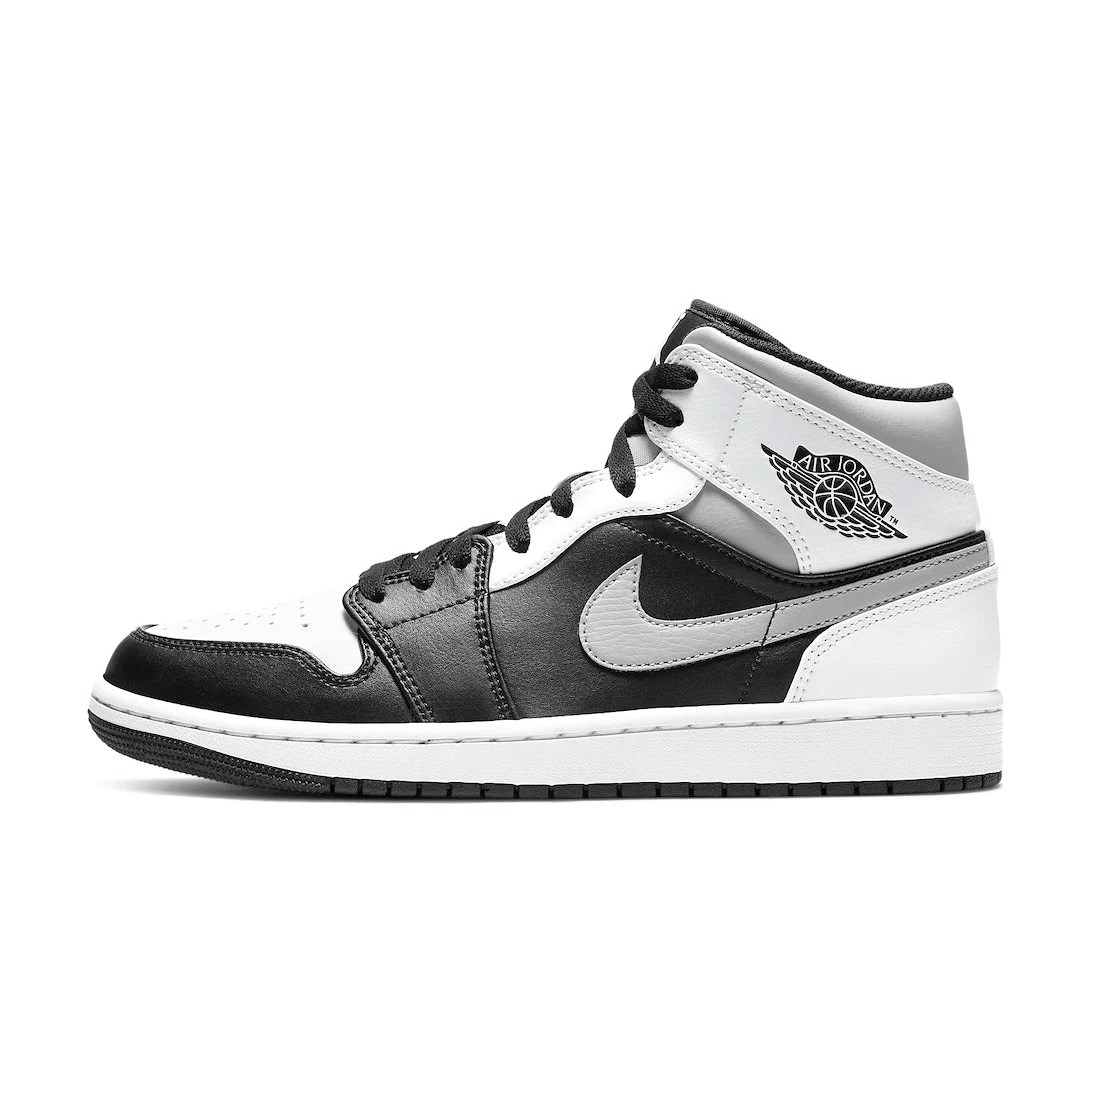 Nike Air Jordan 1 Erkek Spor Ayakkabı Black - White - Lt Smoke Grey